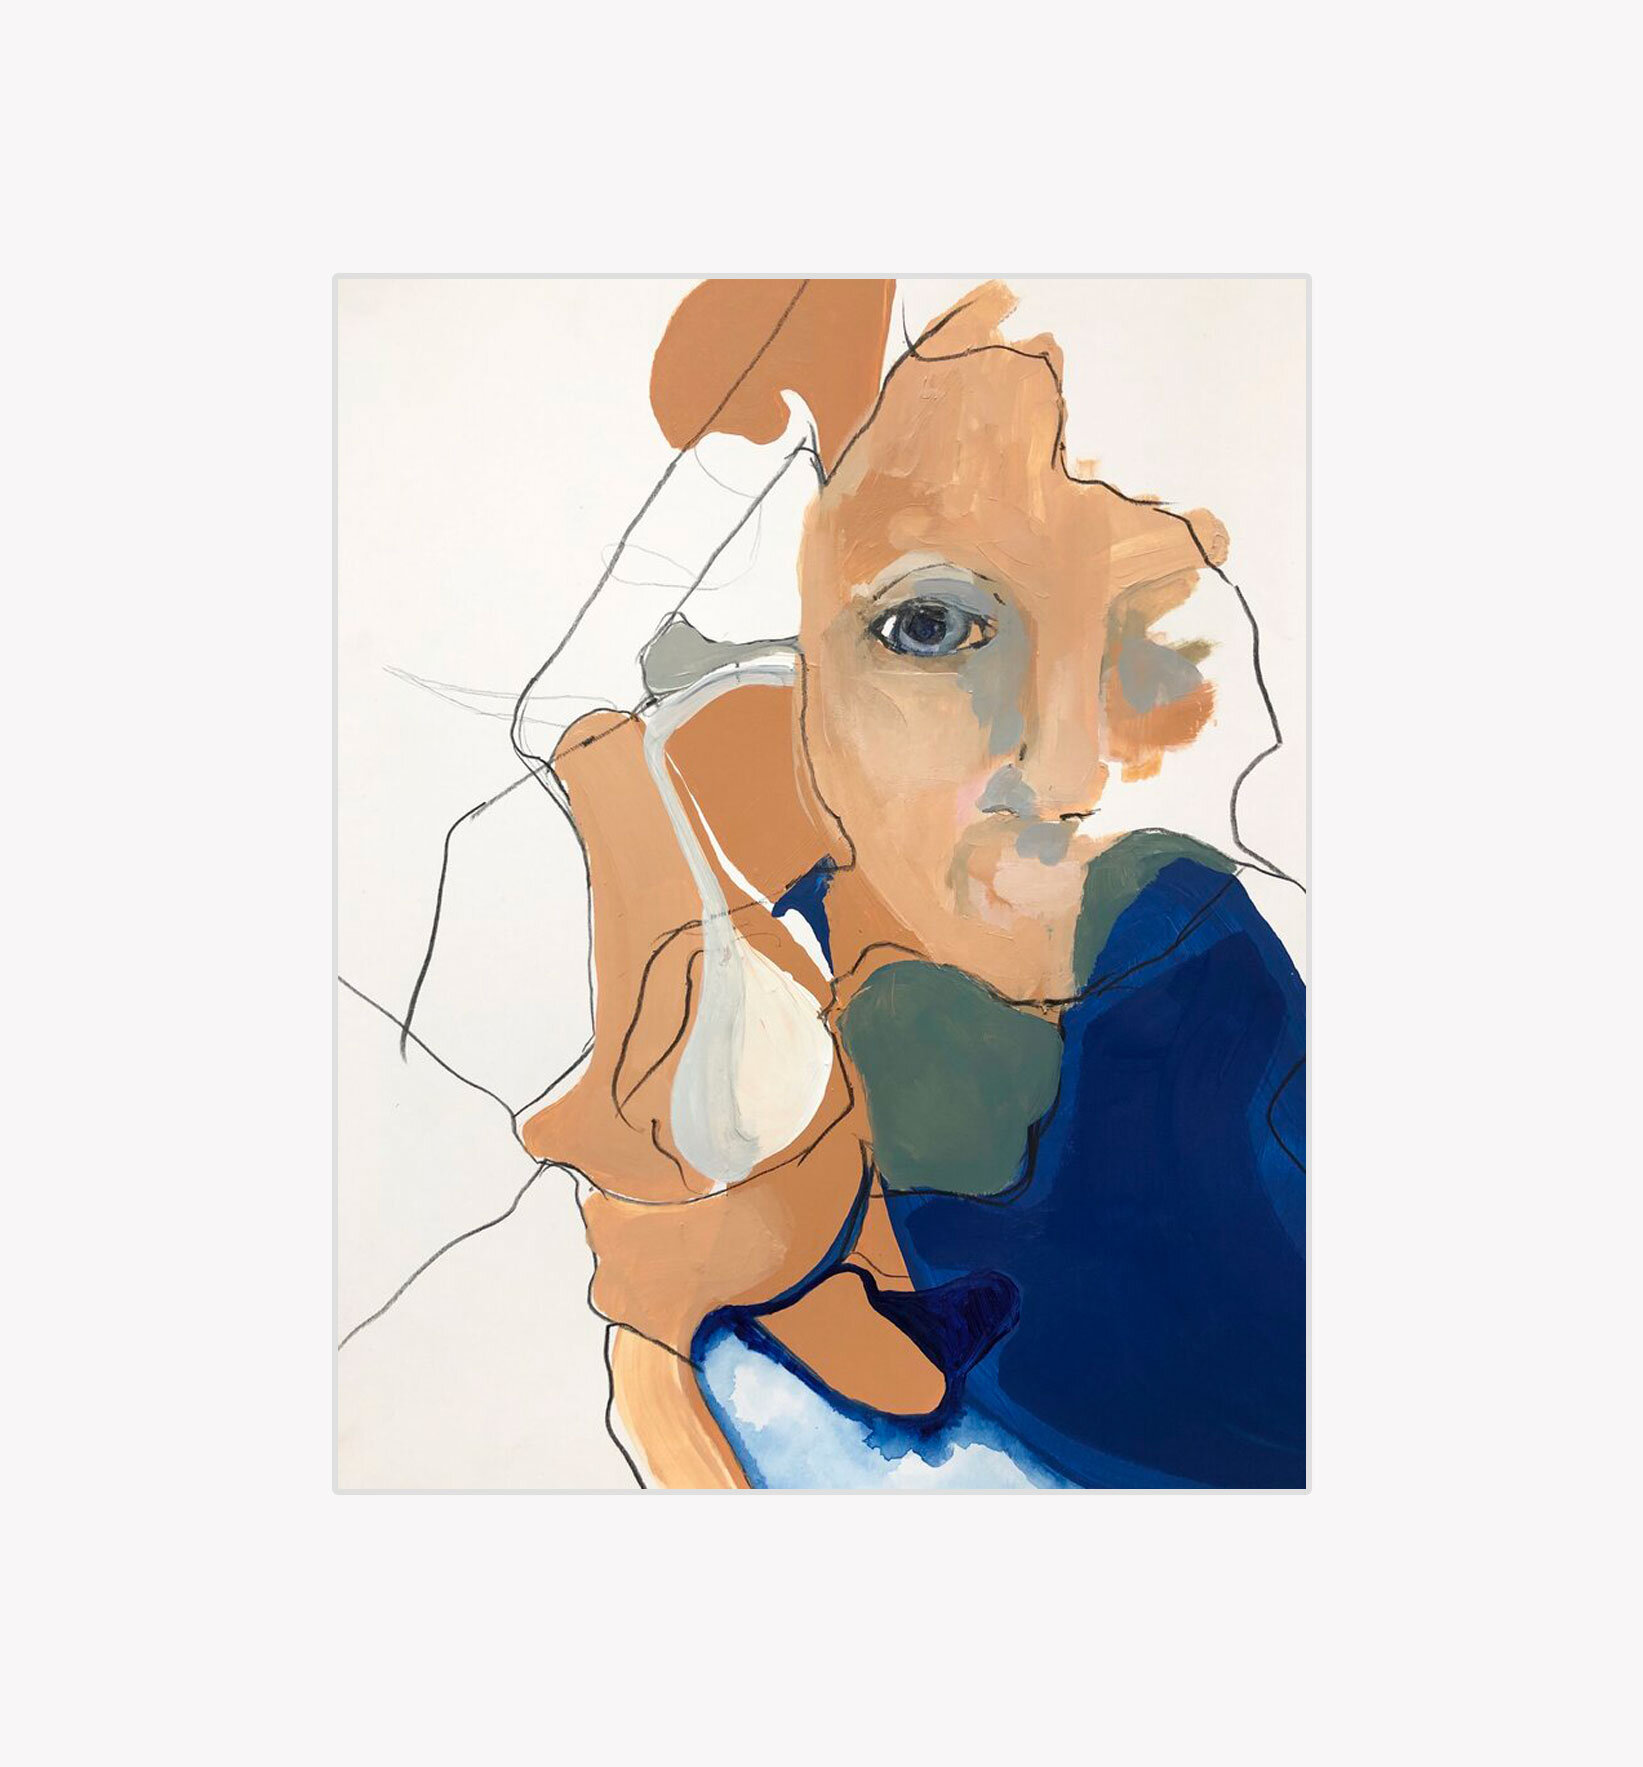   Recluse , Kristi Head 2019. Acrylic on paper, 11 x 8.5 inches. 